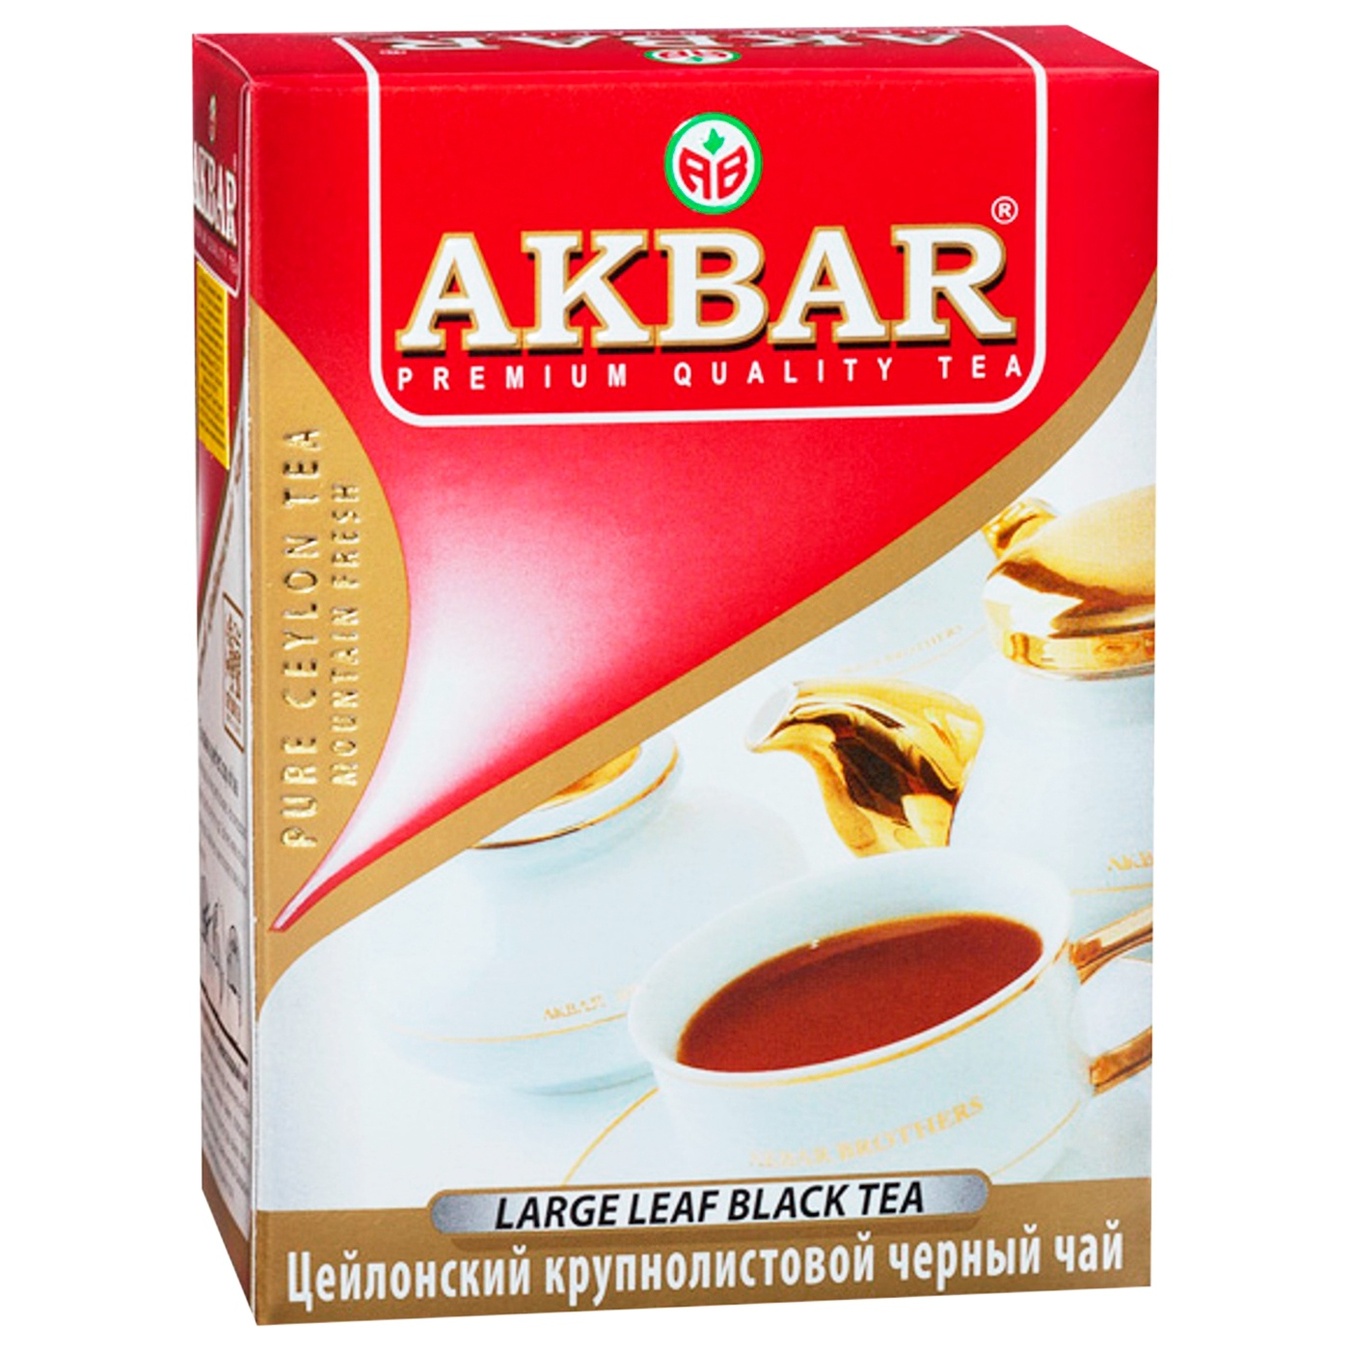 Akbar Favorite black Ceylon large-leaf tea 100g